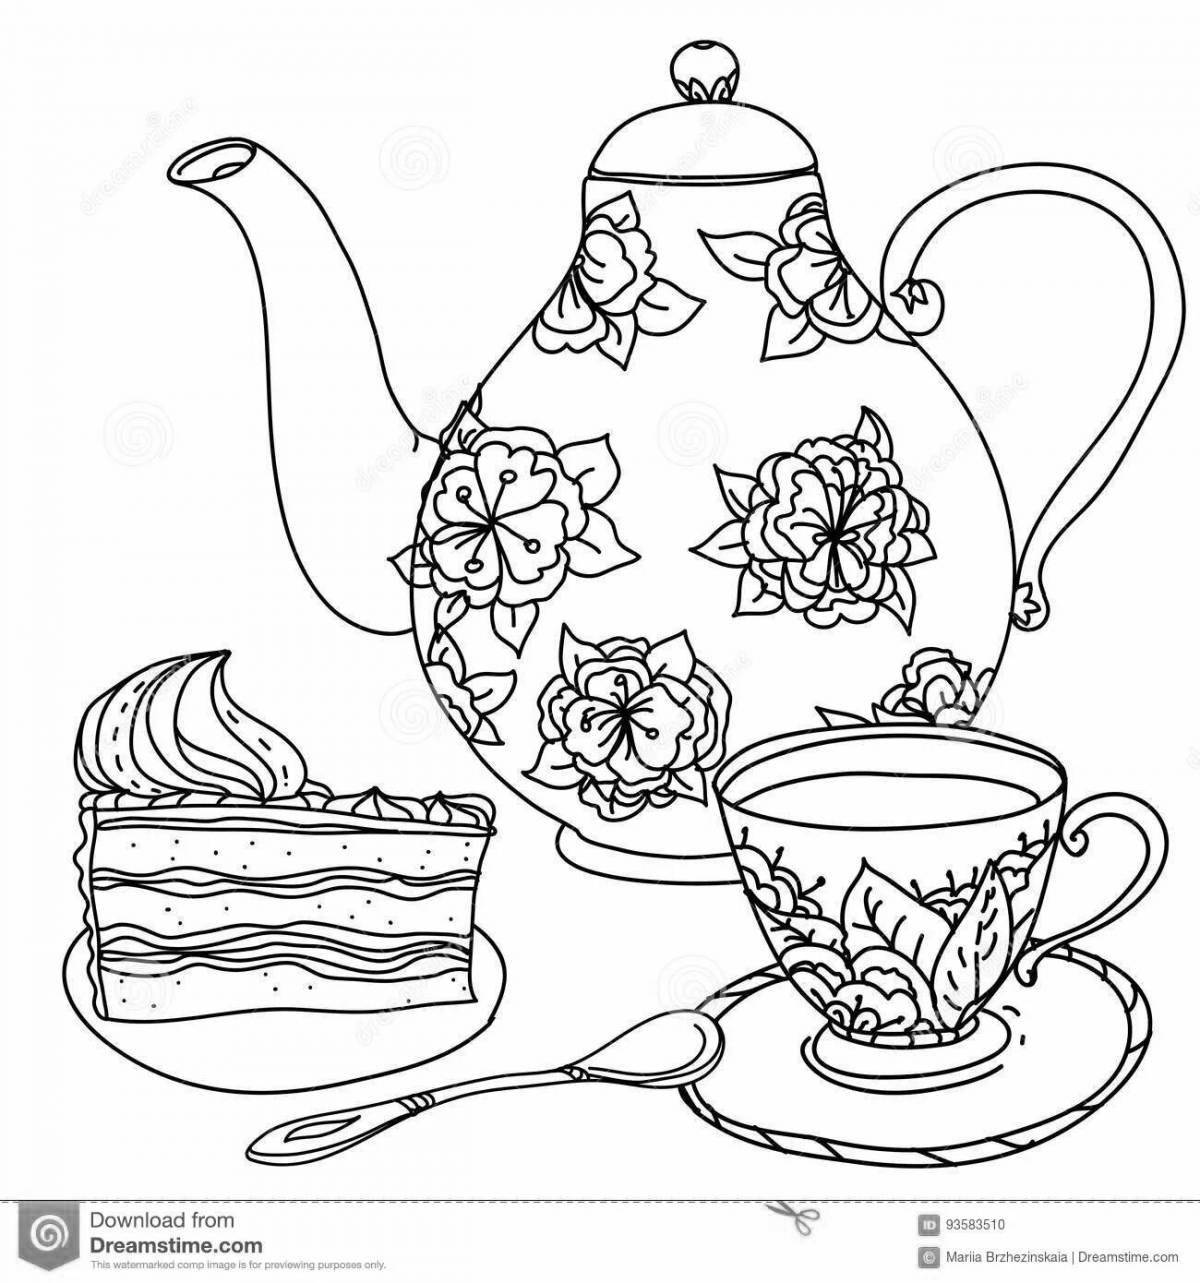 Glowing teapot and mug coloring page